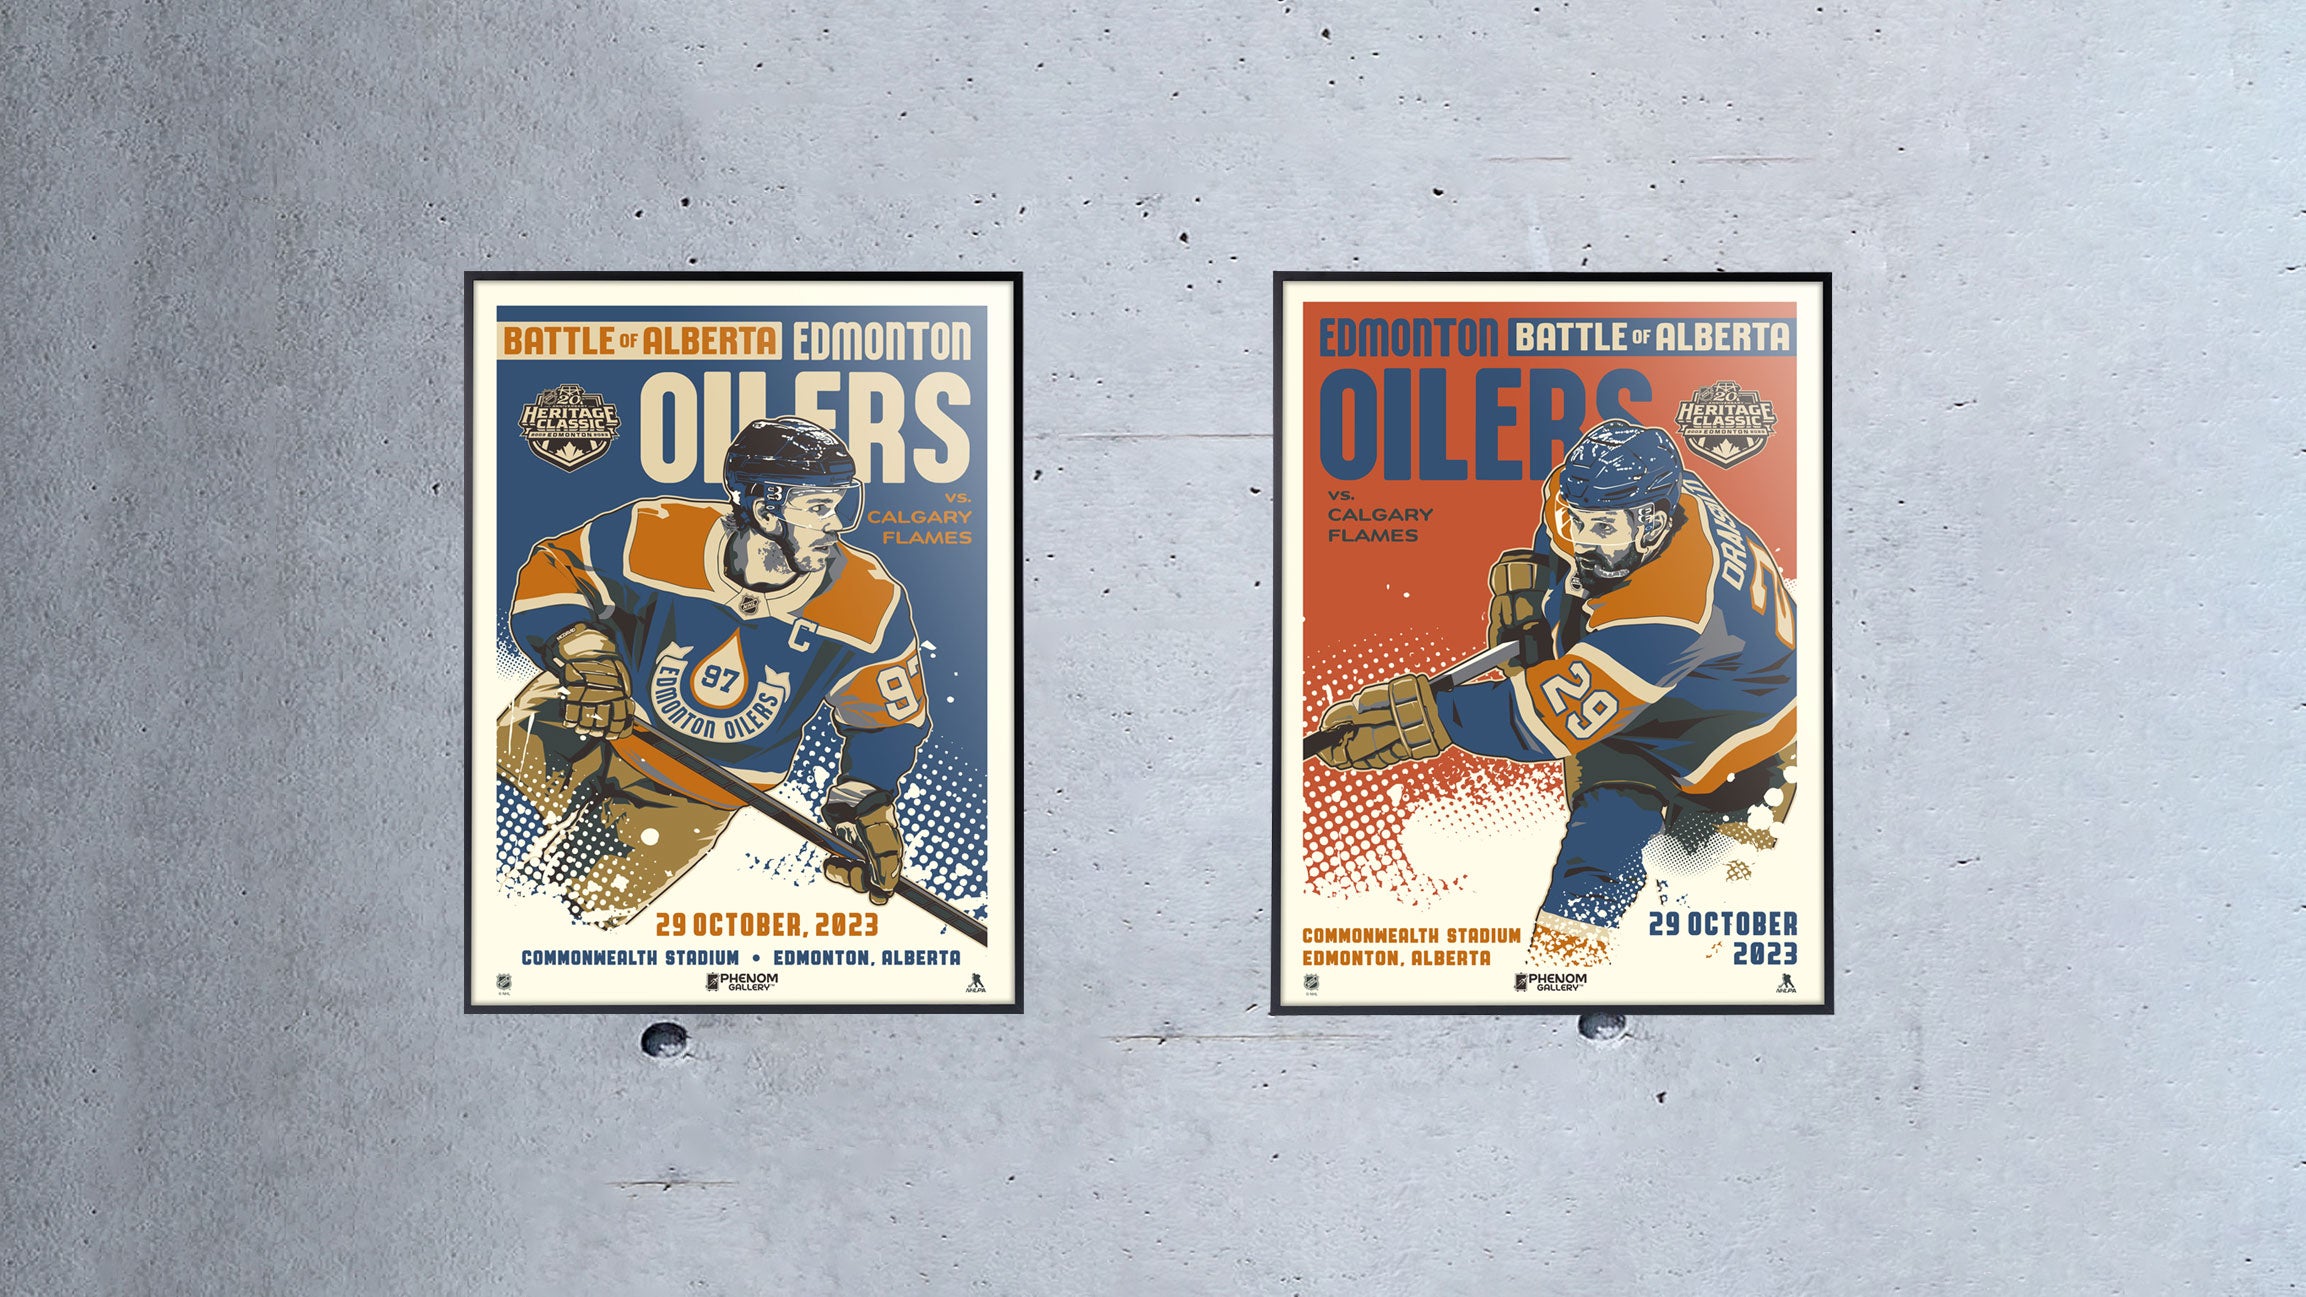 ICE District Authentics  Edmonton Oilers Jerseys, Gear, and Apparel